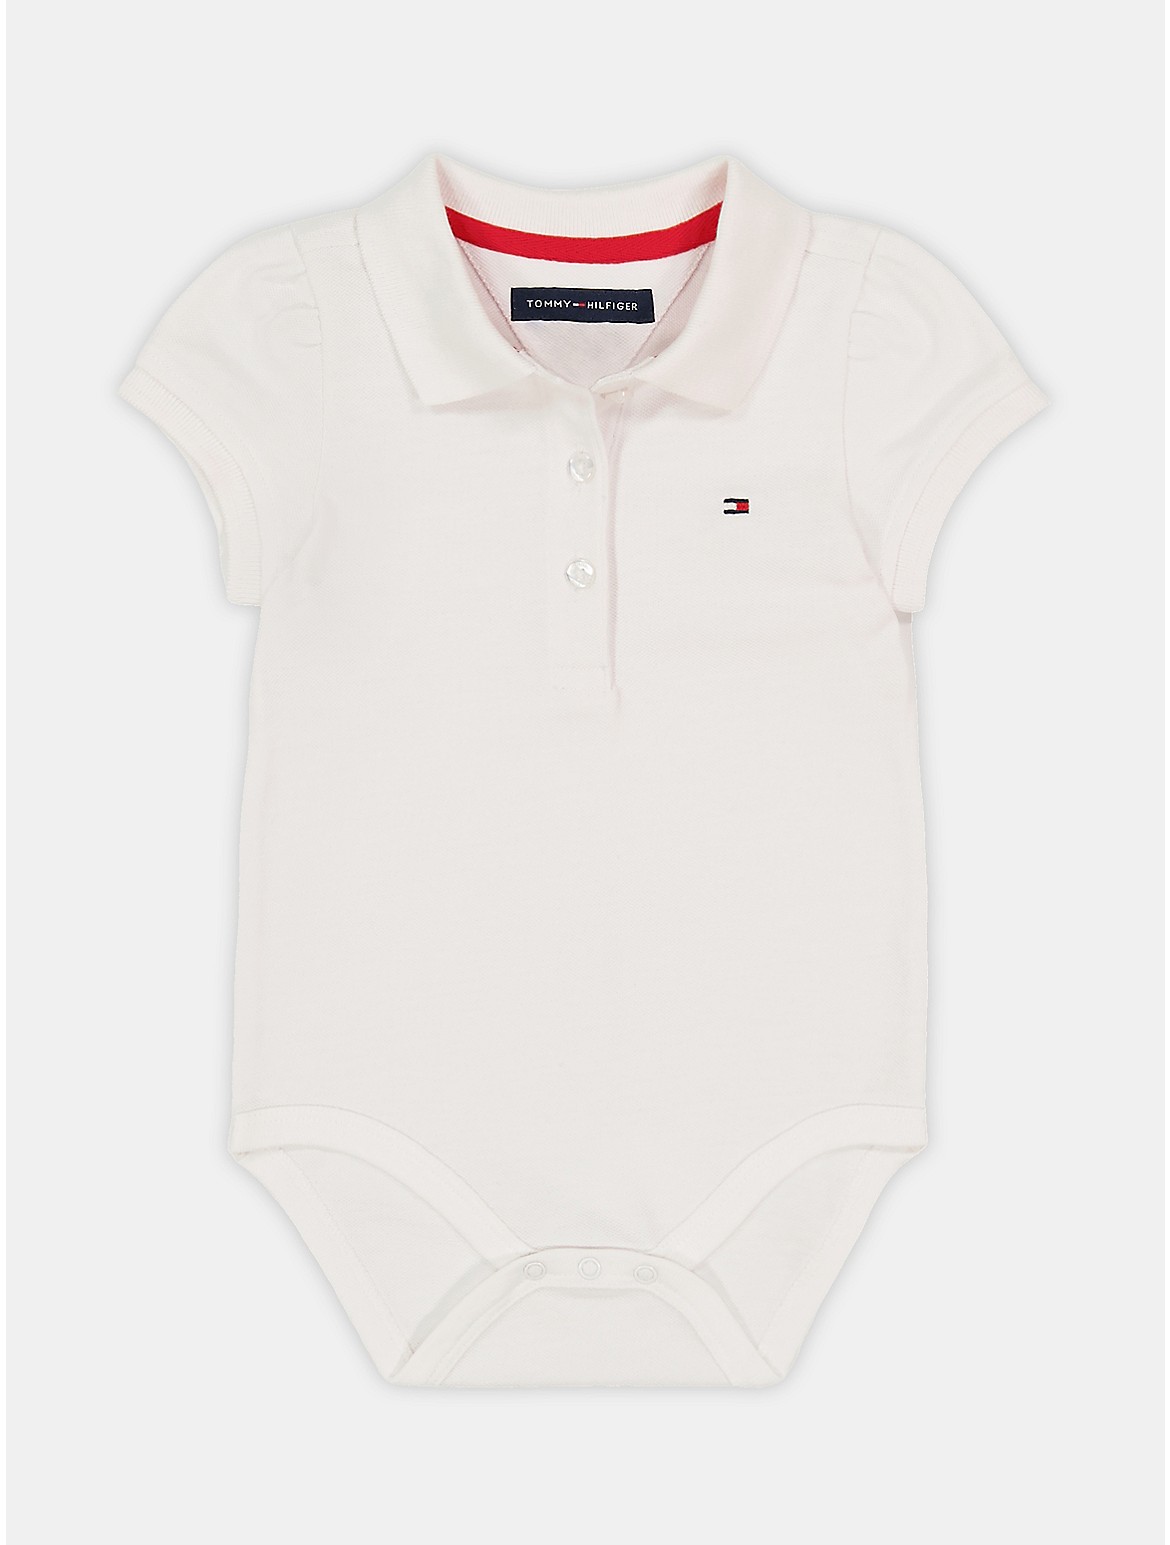 Tommy Hilfiger Girls' Babies' Solid Bodysuit - White - 3-6M